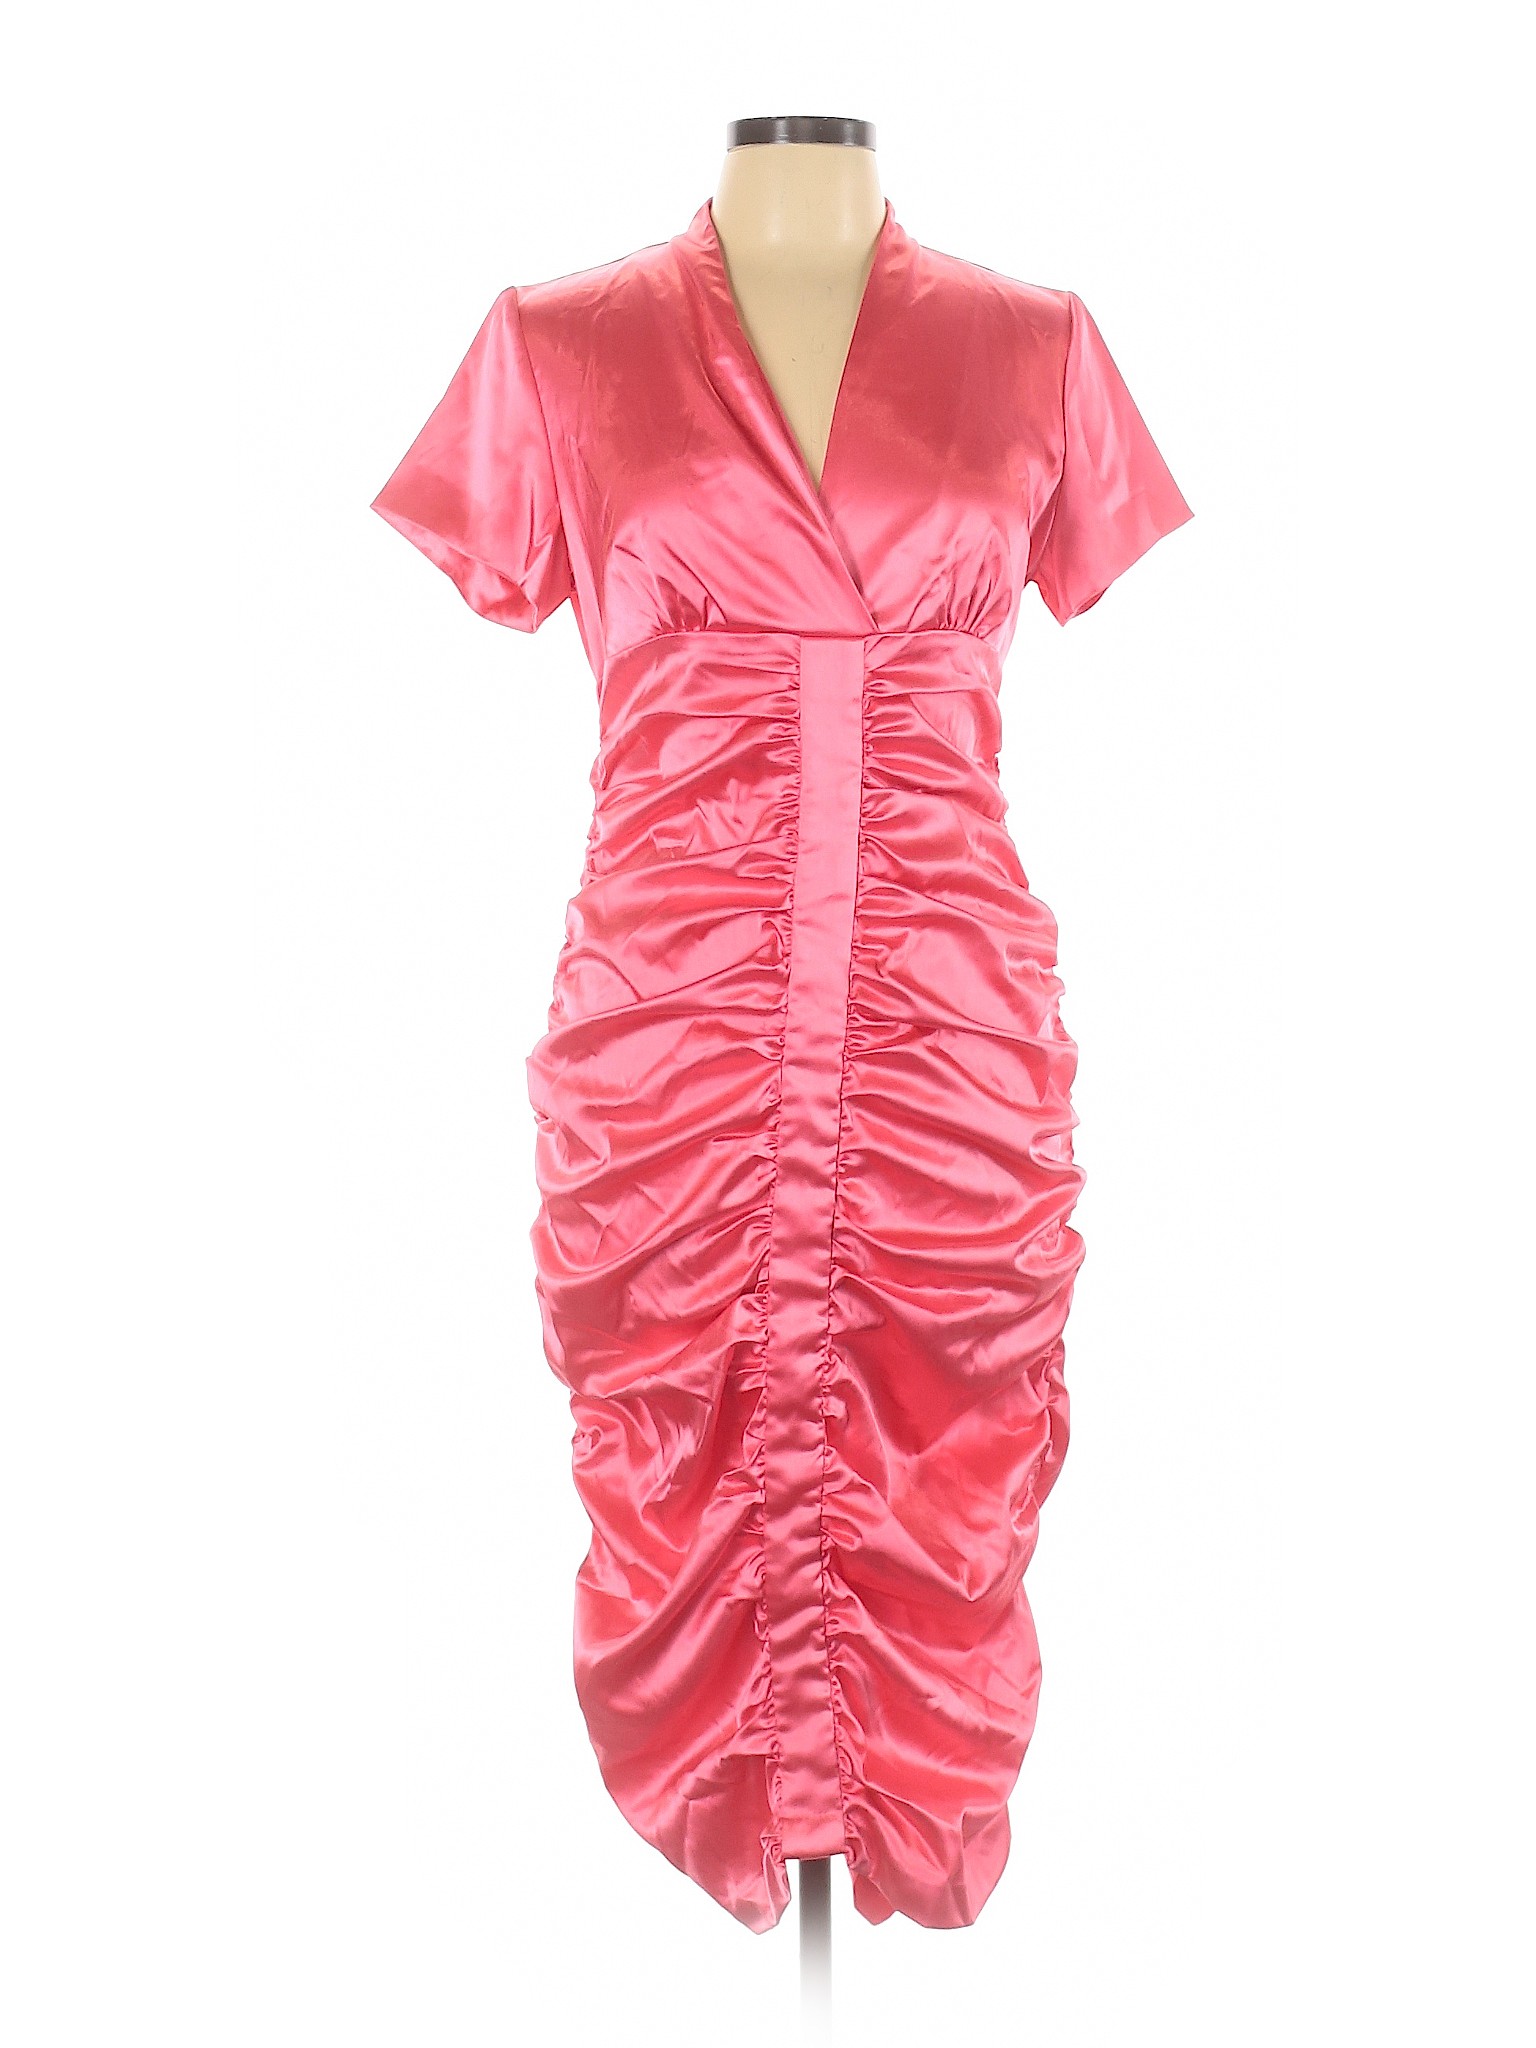 ASHRO Women Pink Cocktail Dress 10 | eBay